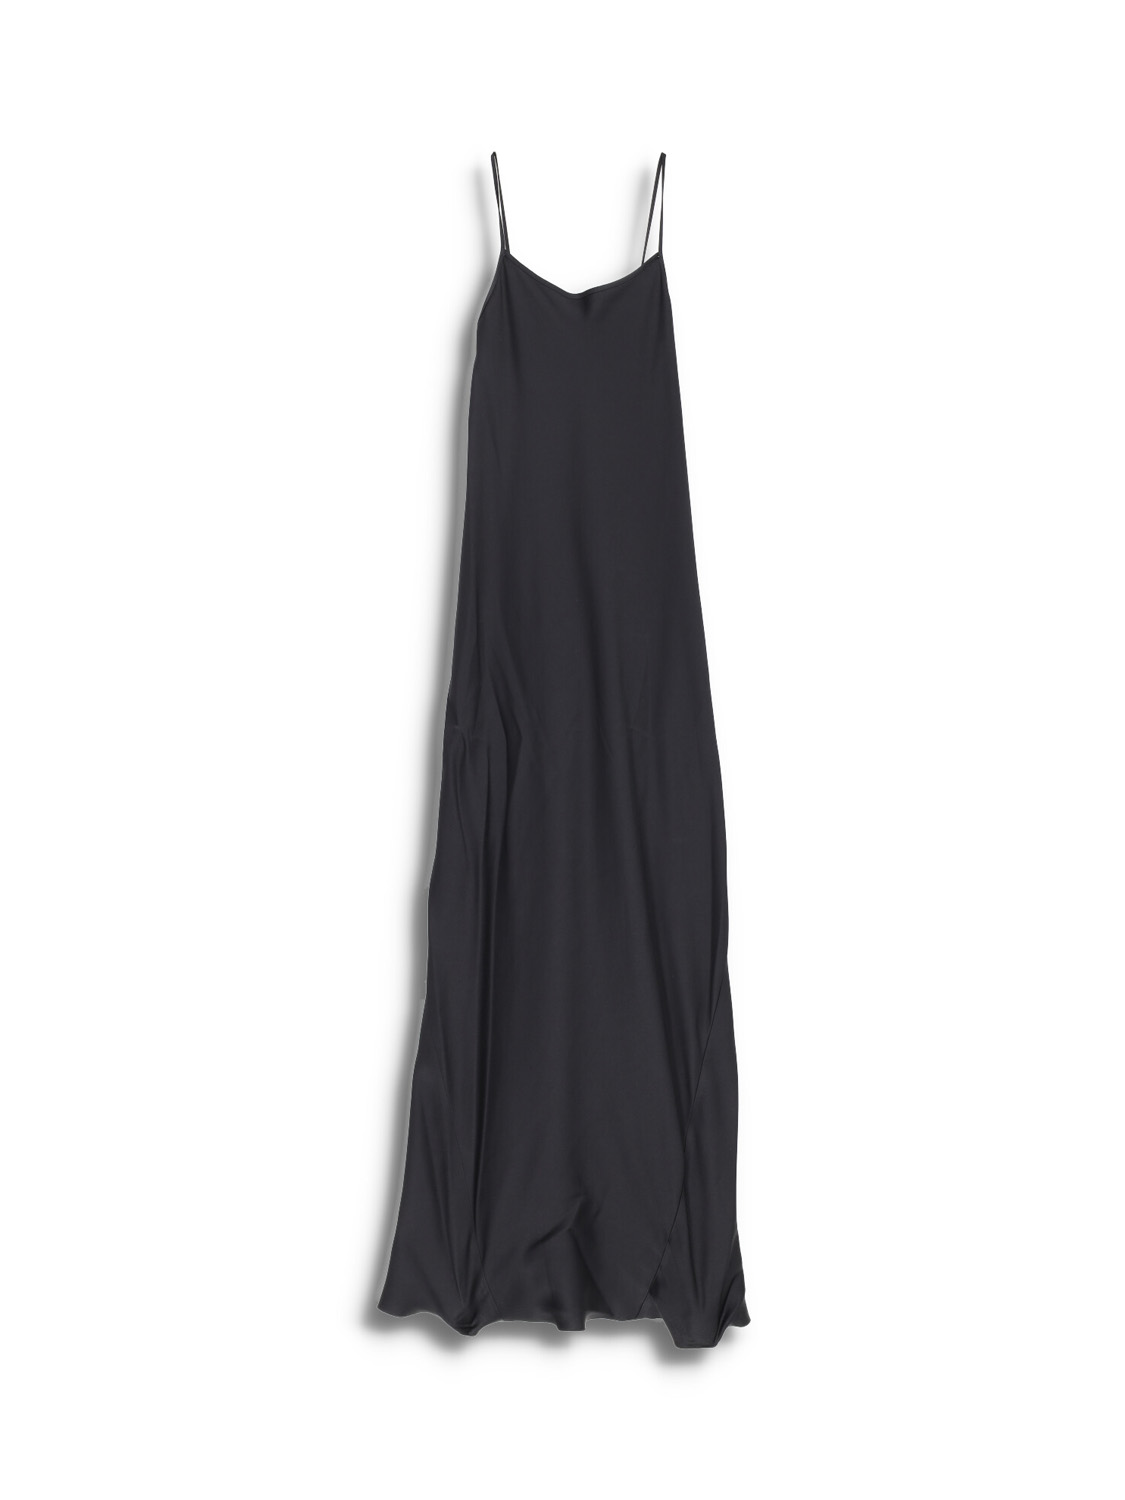 Floor Length Cami Dress - Floor length dress in flowing fabric